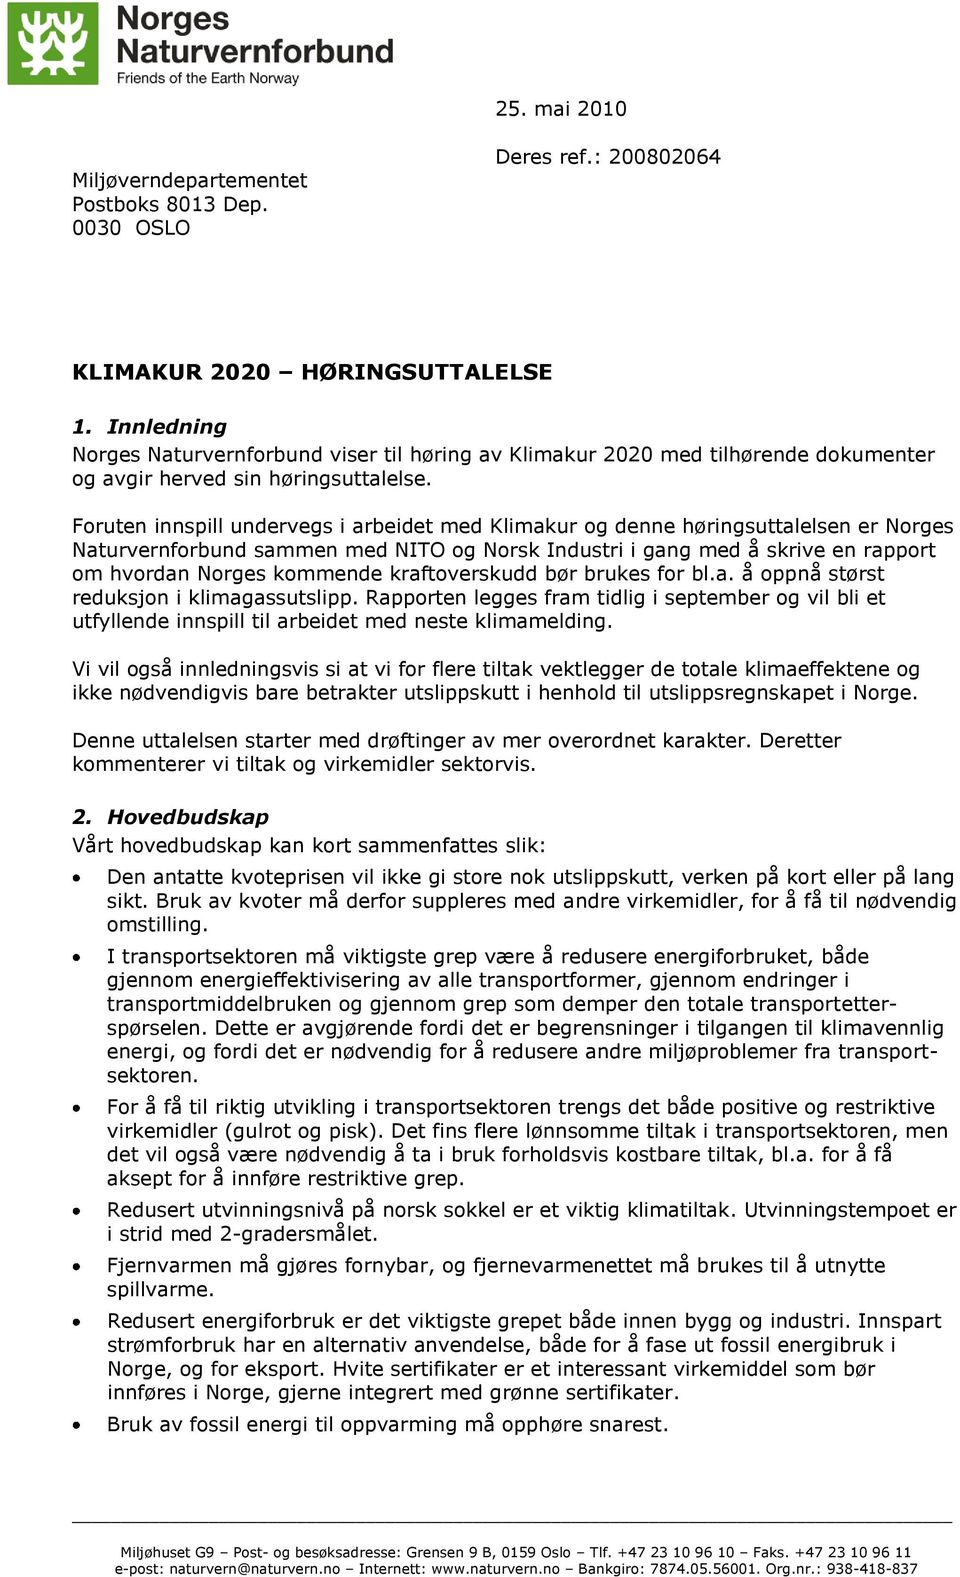 Foruten innspill undervegs i arbeidet med Klimakur og denne høringsuttalelsen er Norges Naturvernforbund sammen med NITO og Norsk Industri i gang med å skrive en rapport om hvordan Norges kommende